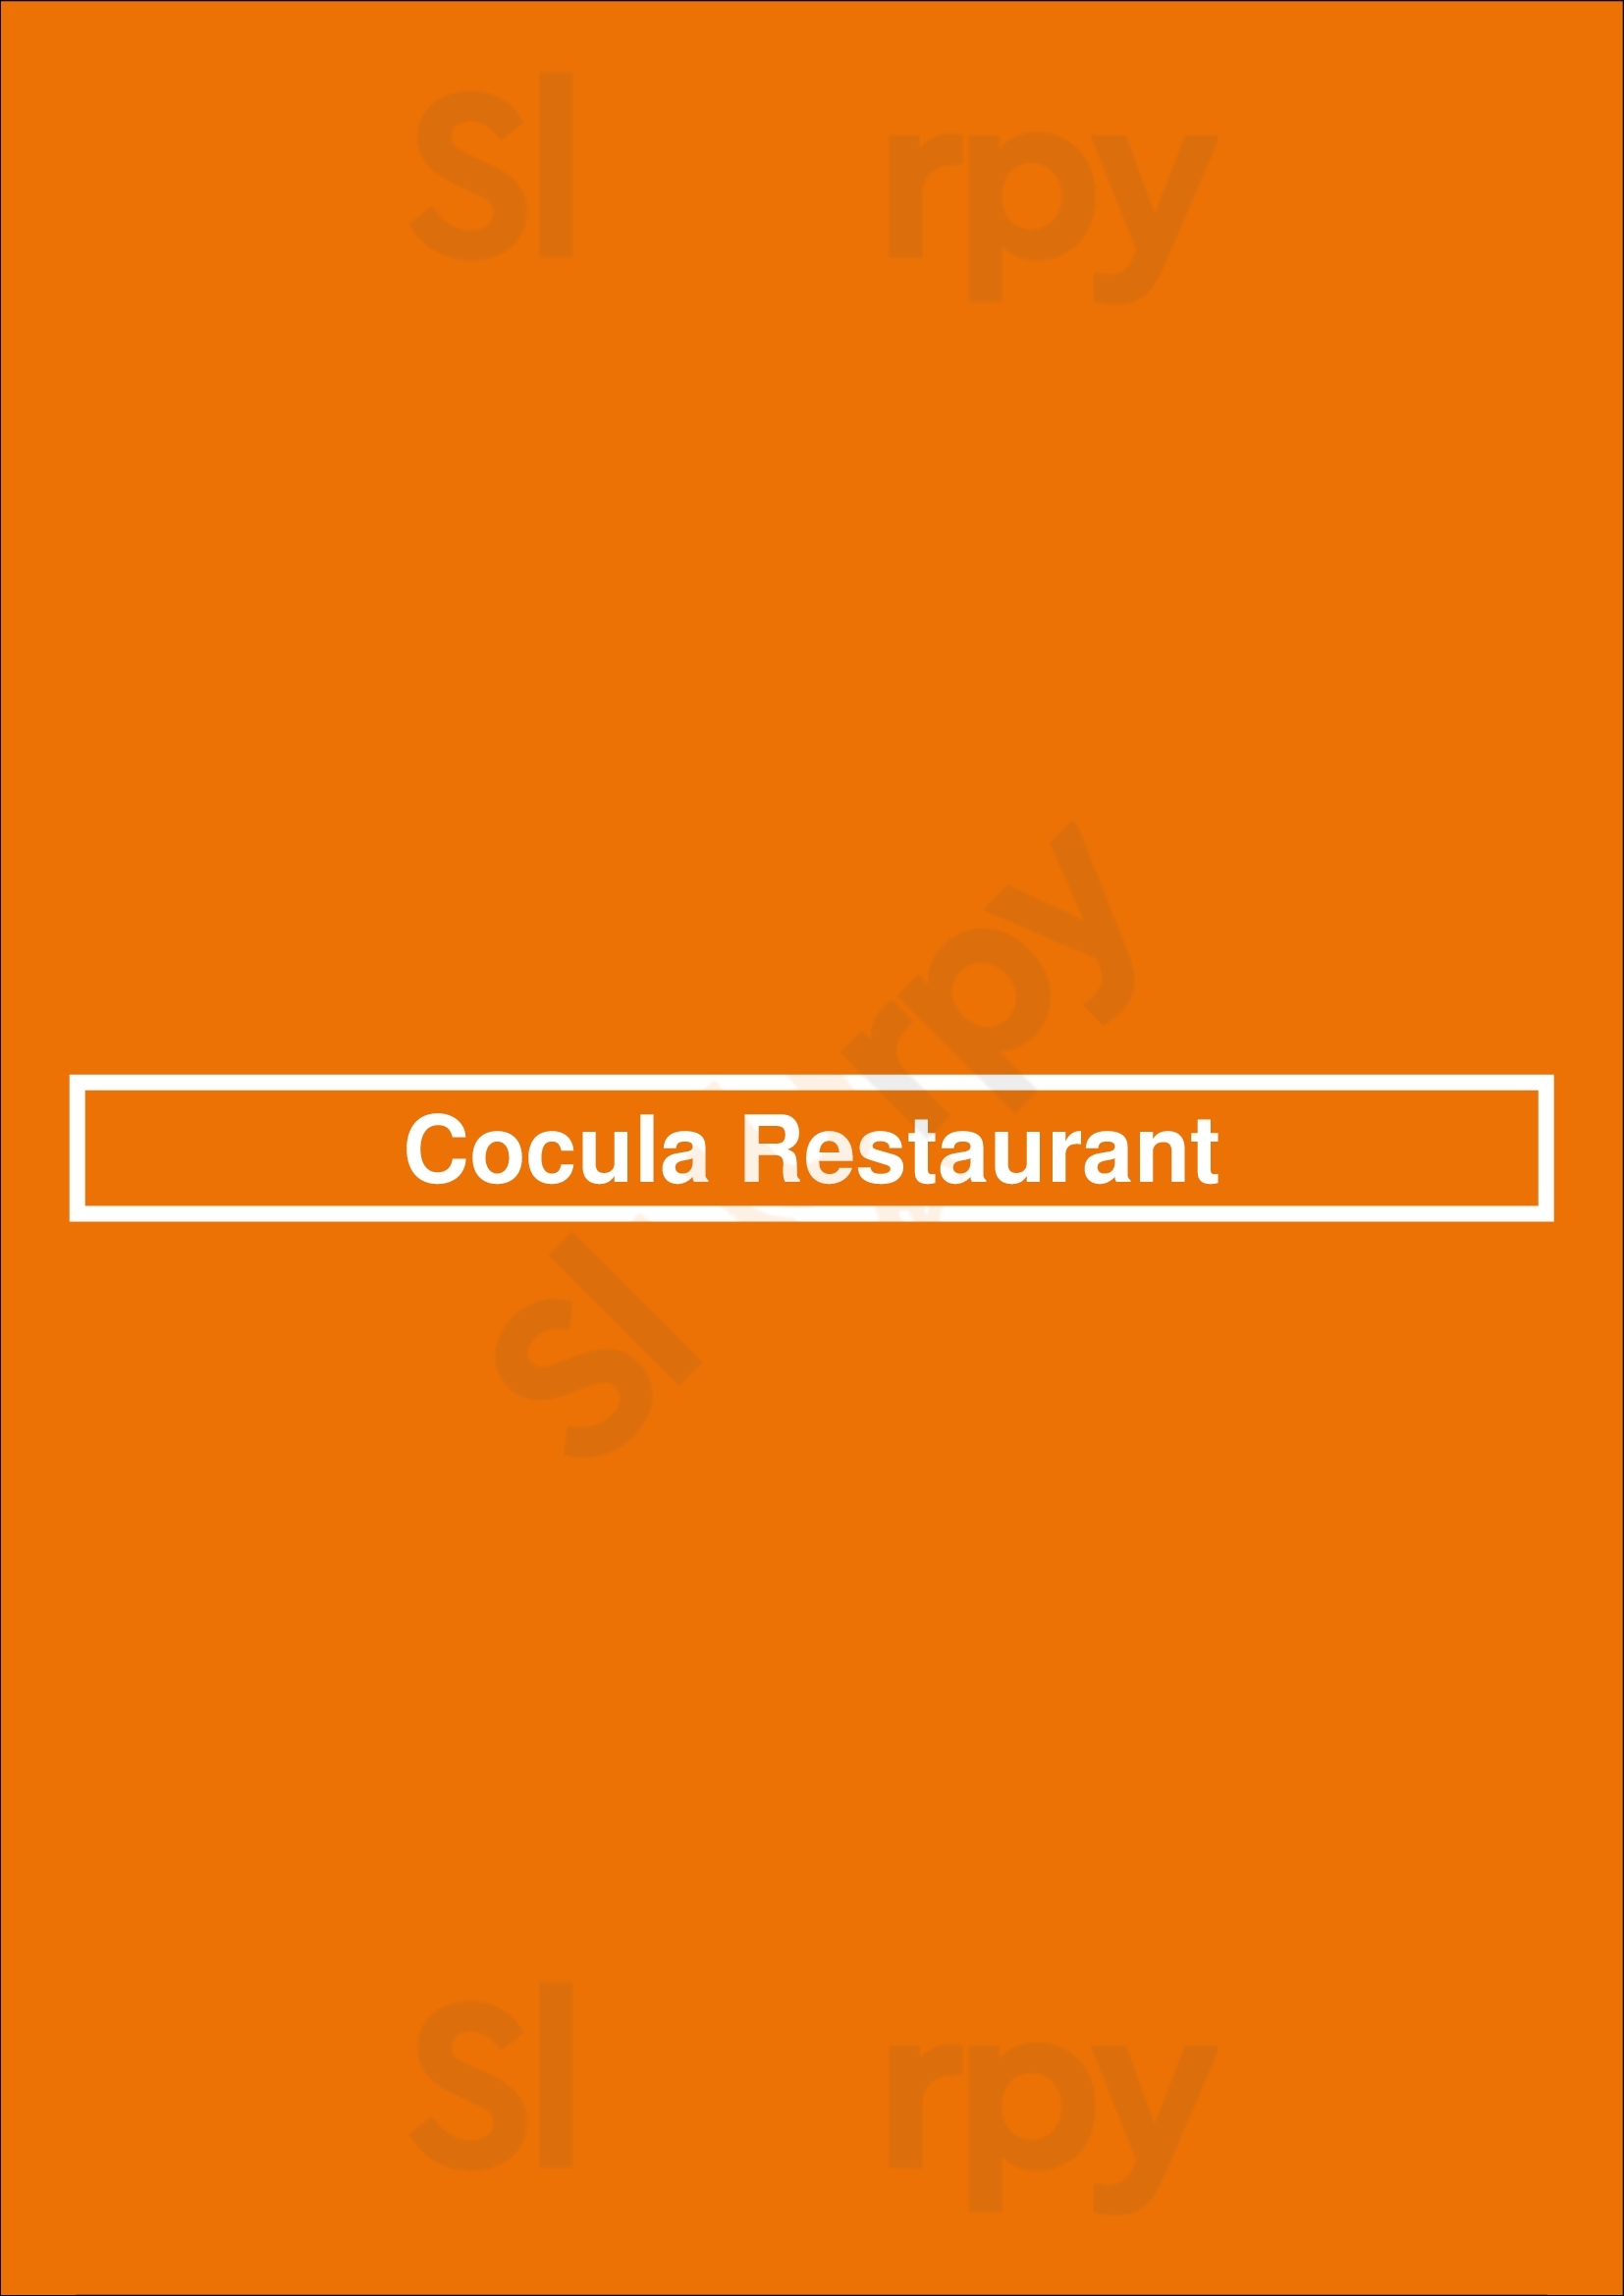 Cocula Restaurant Chicago Menu - 1